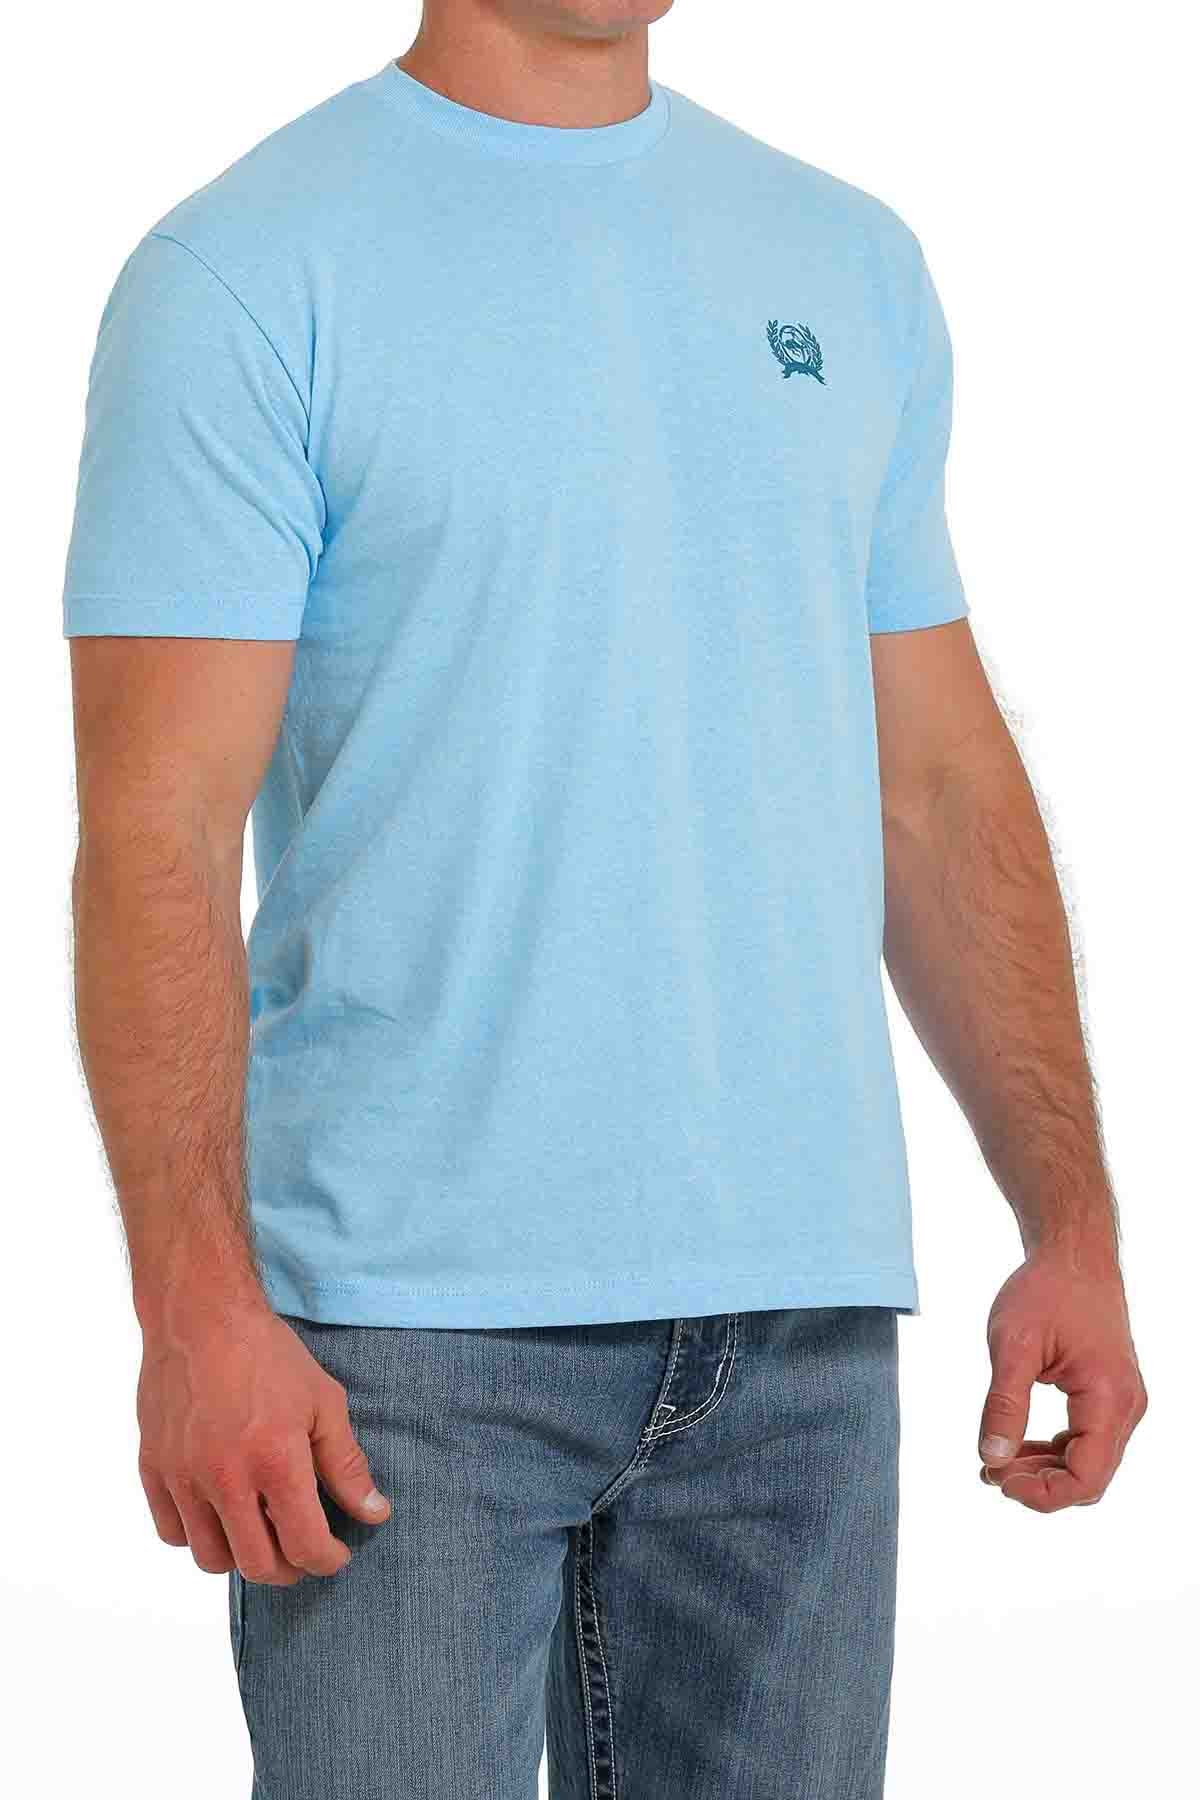 Men's Cinch "Fixin' To Get Western" Graphic T-Shirt Heather Light Blue